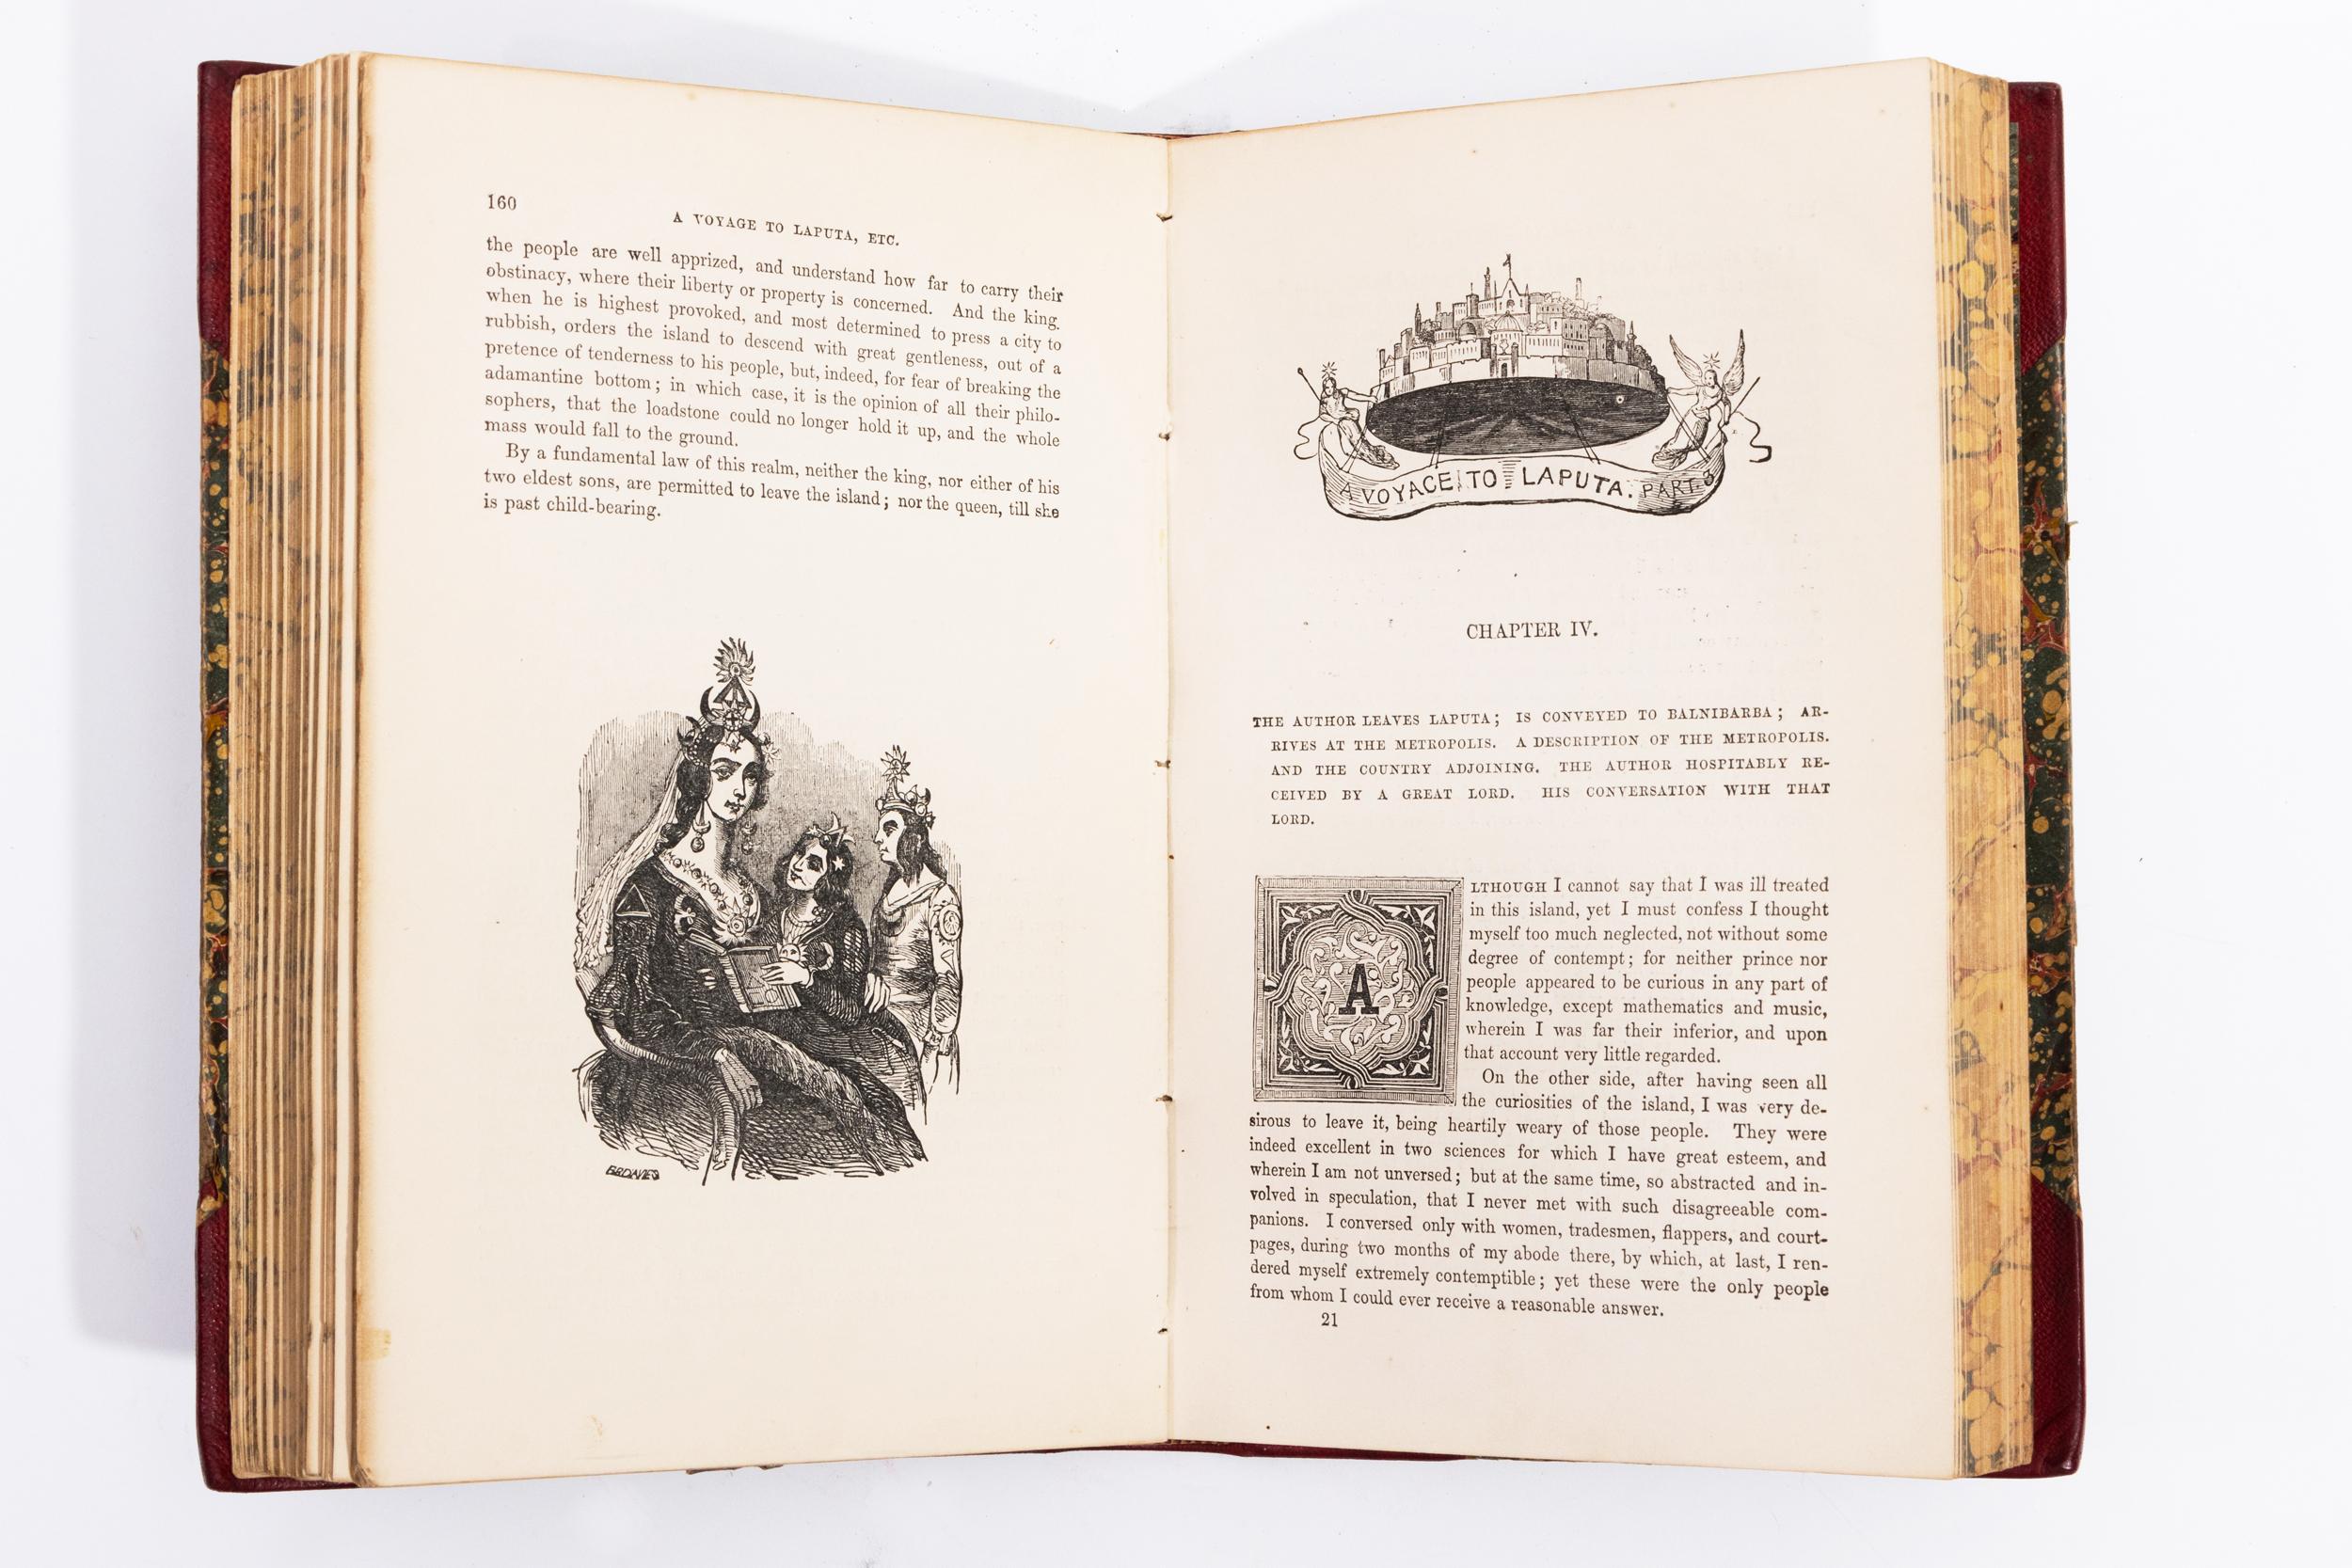 1 Volume, Jonathan Swift, D.D. Gulliver's Travels 1